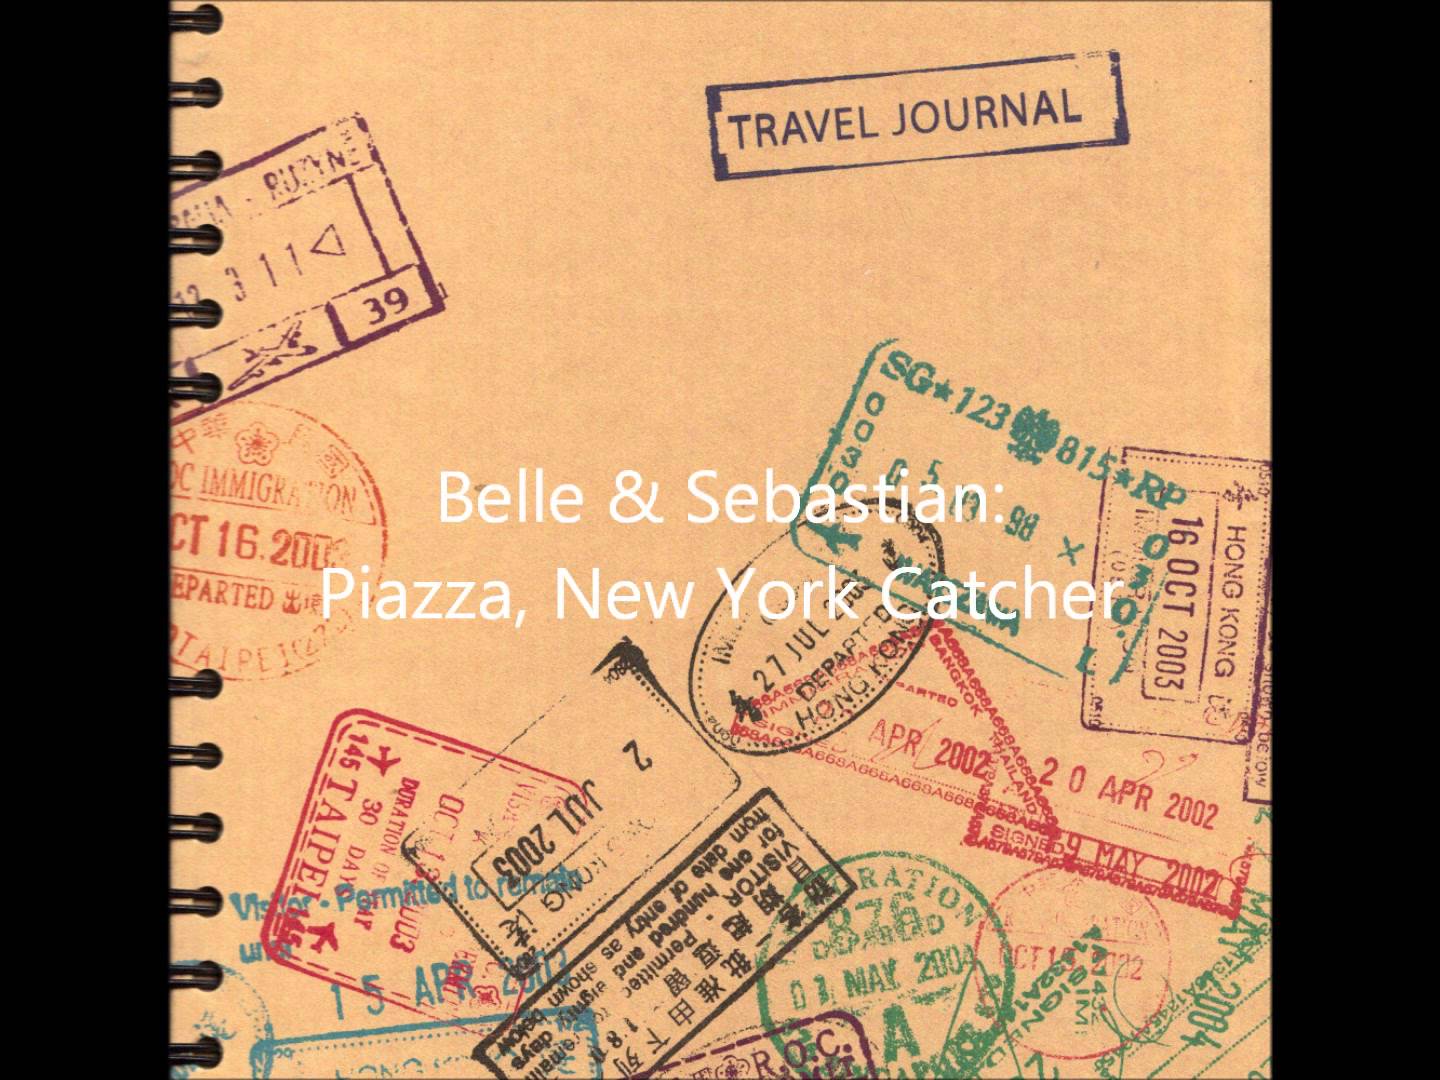 Belle & Sebastian – Piazza, New York Catcher